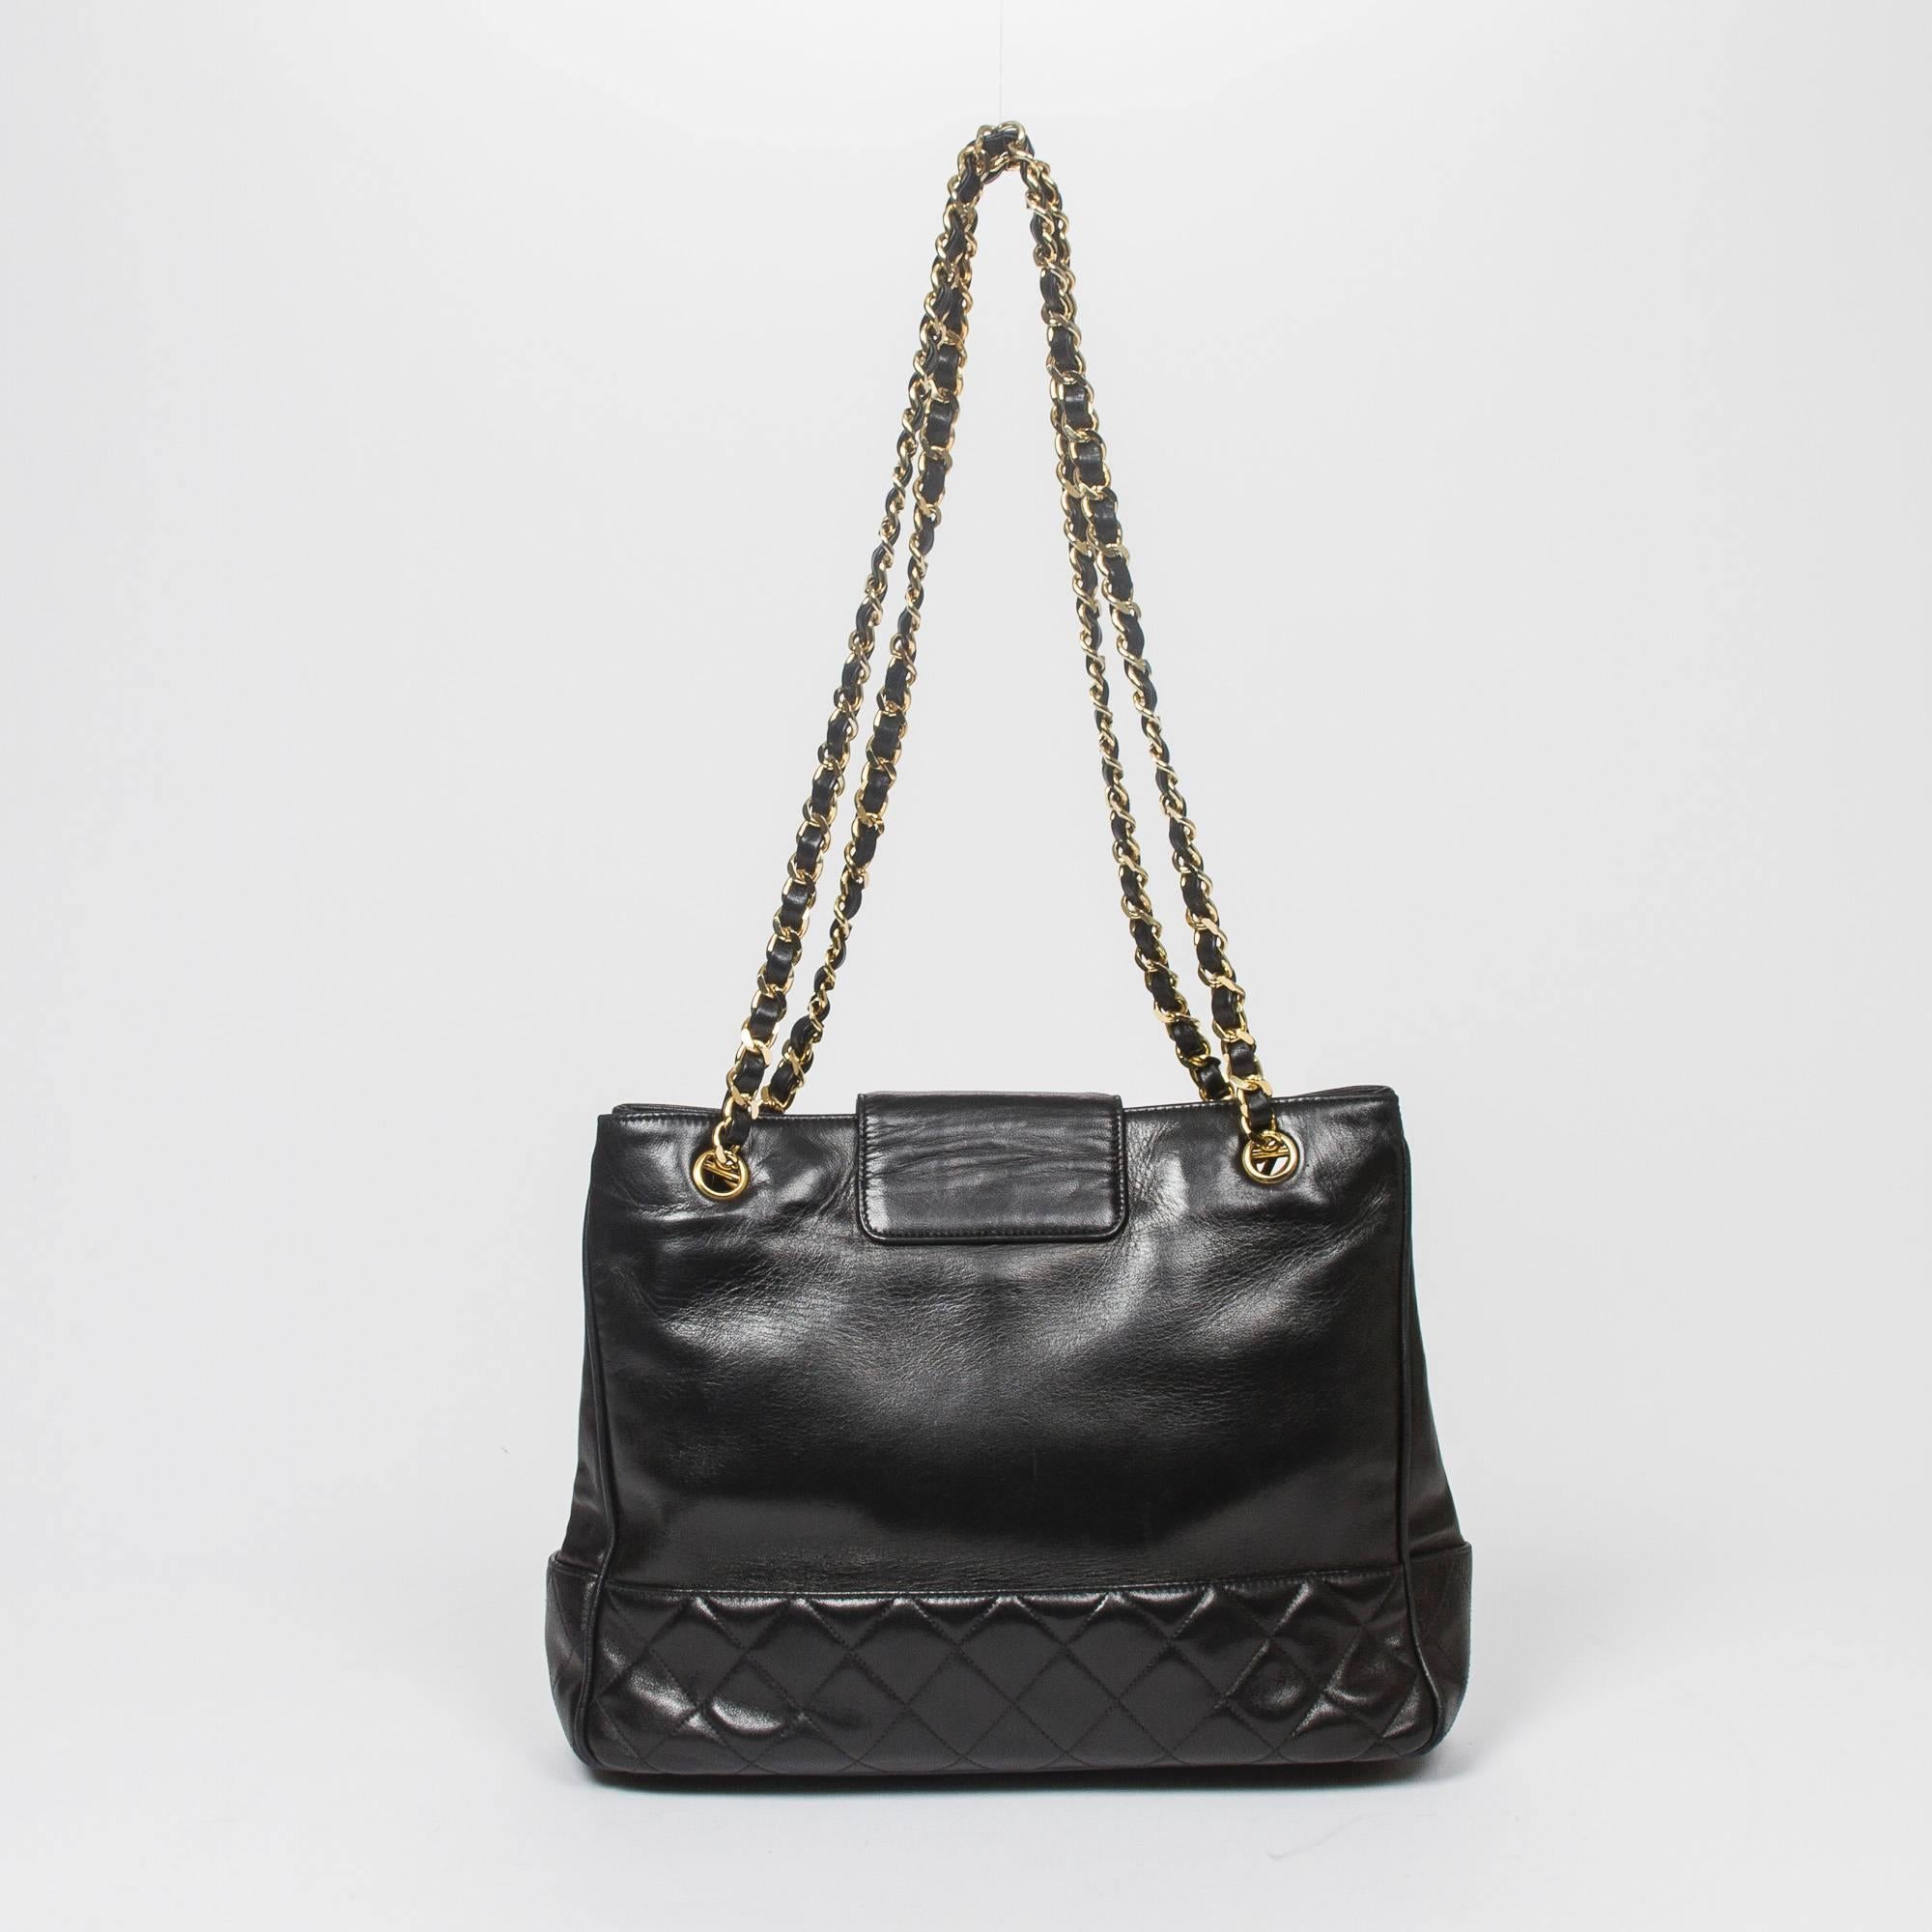 Chanel - Vintage Tote Black Leather 1